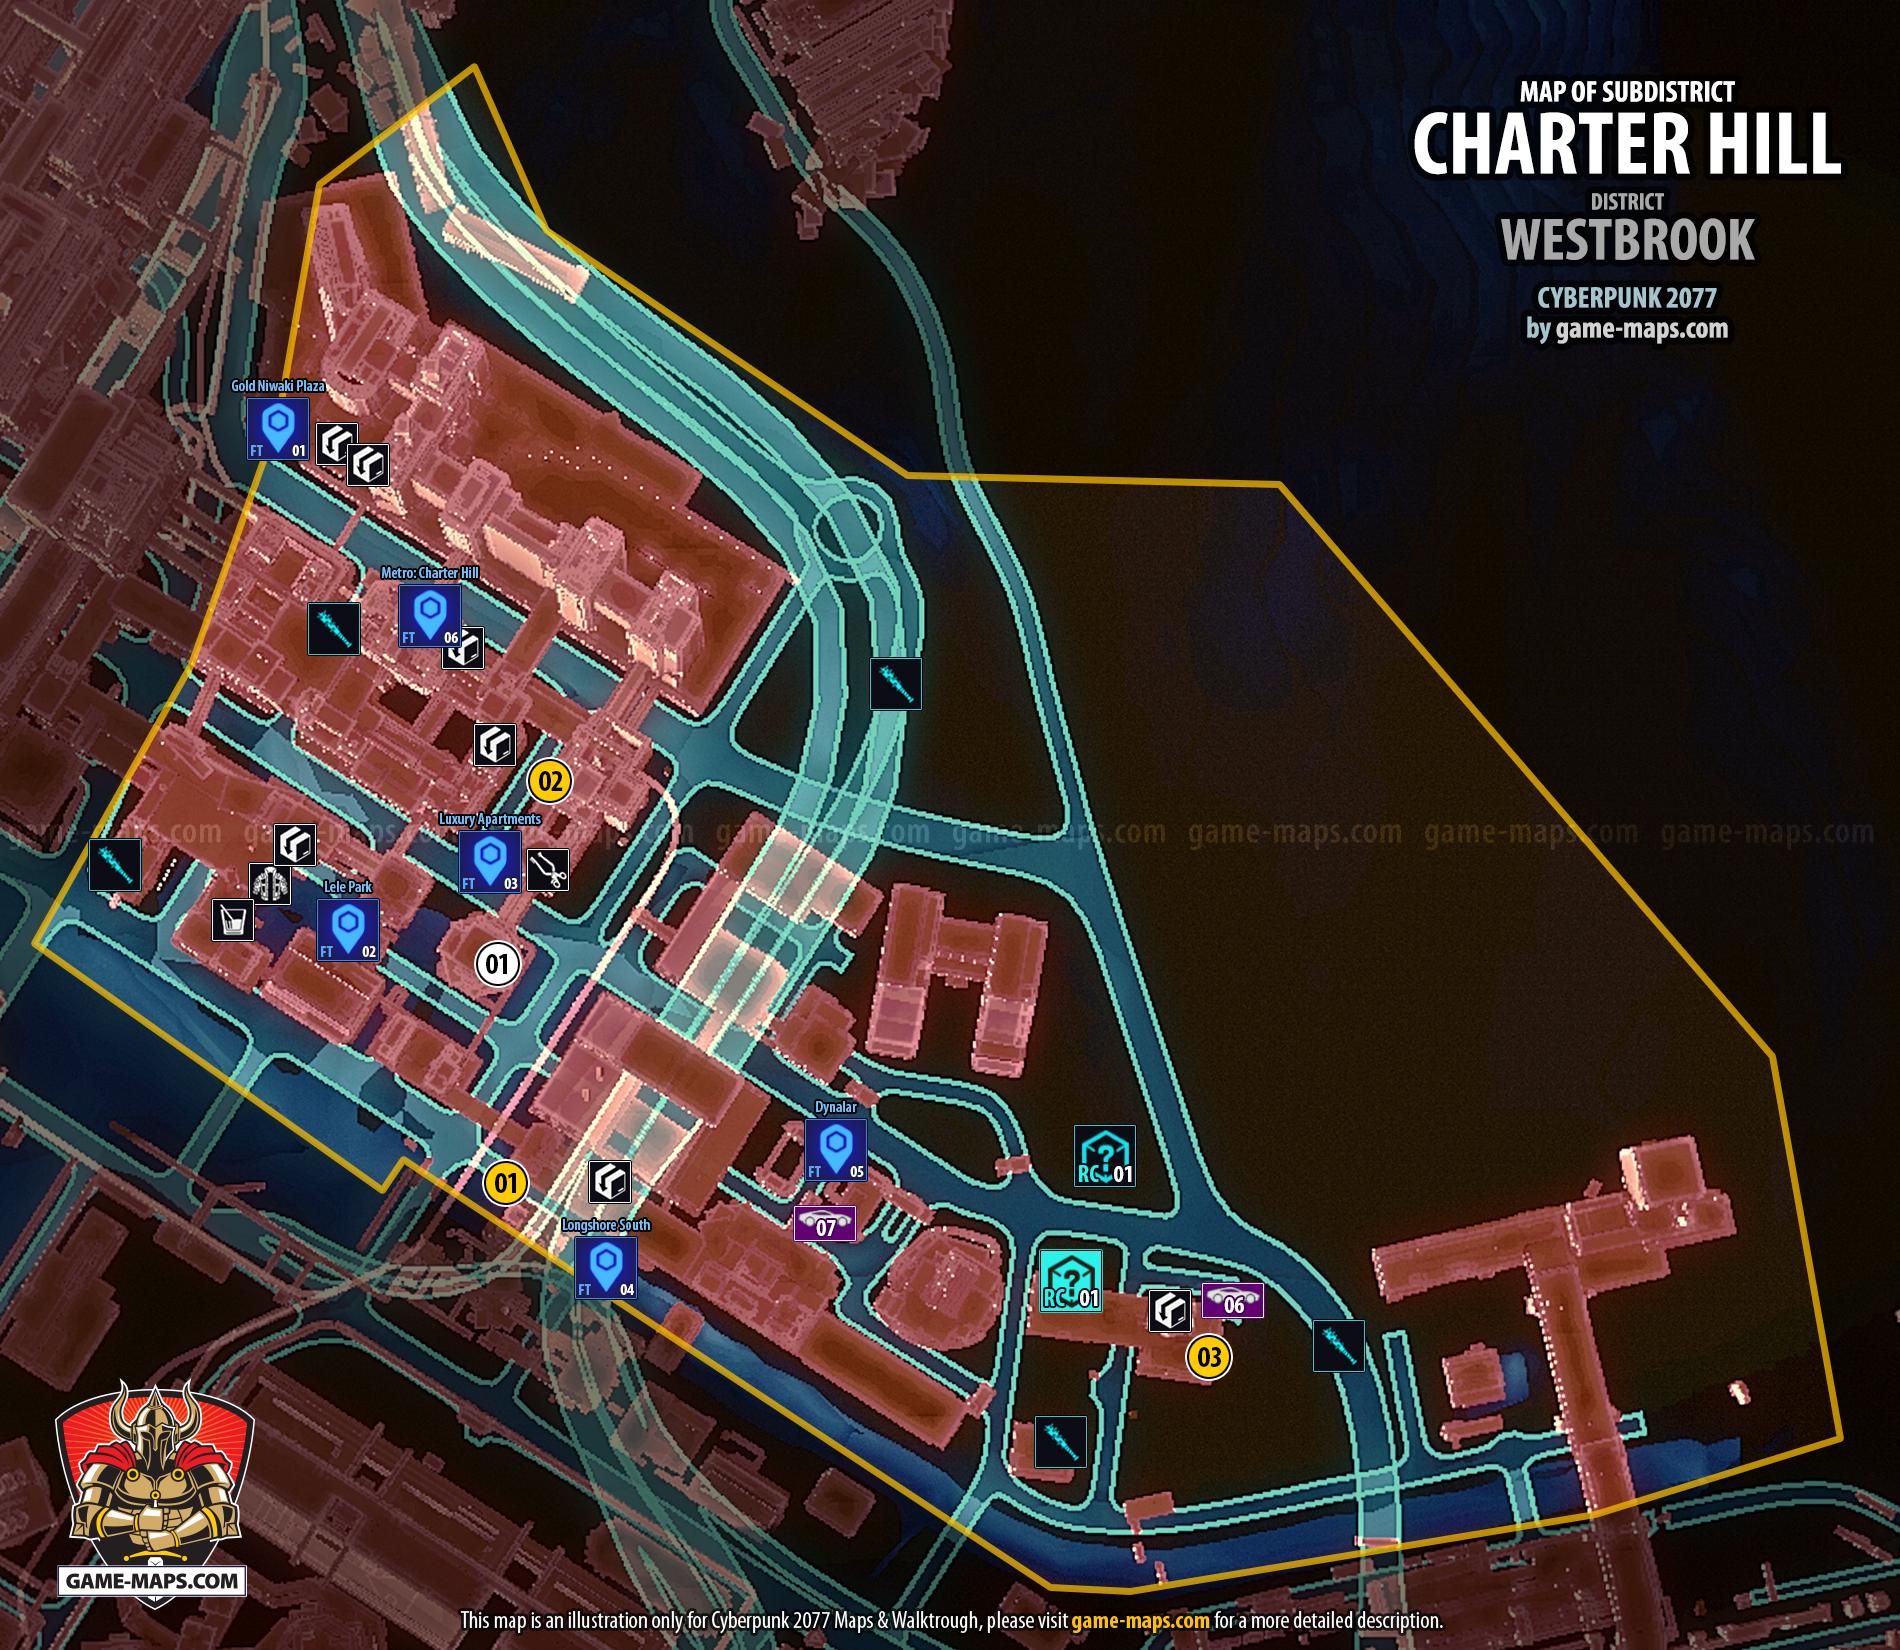 Charter Hill Map in Westbrook District - Cyberpunk 2077